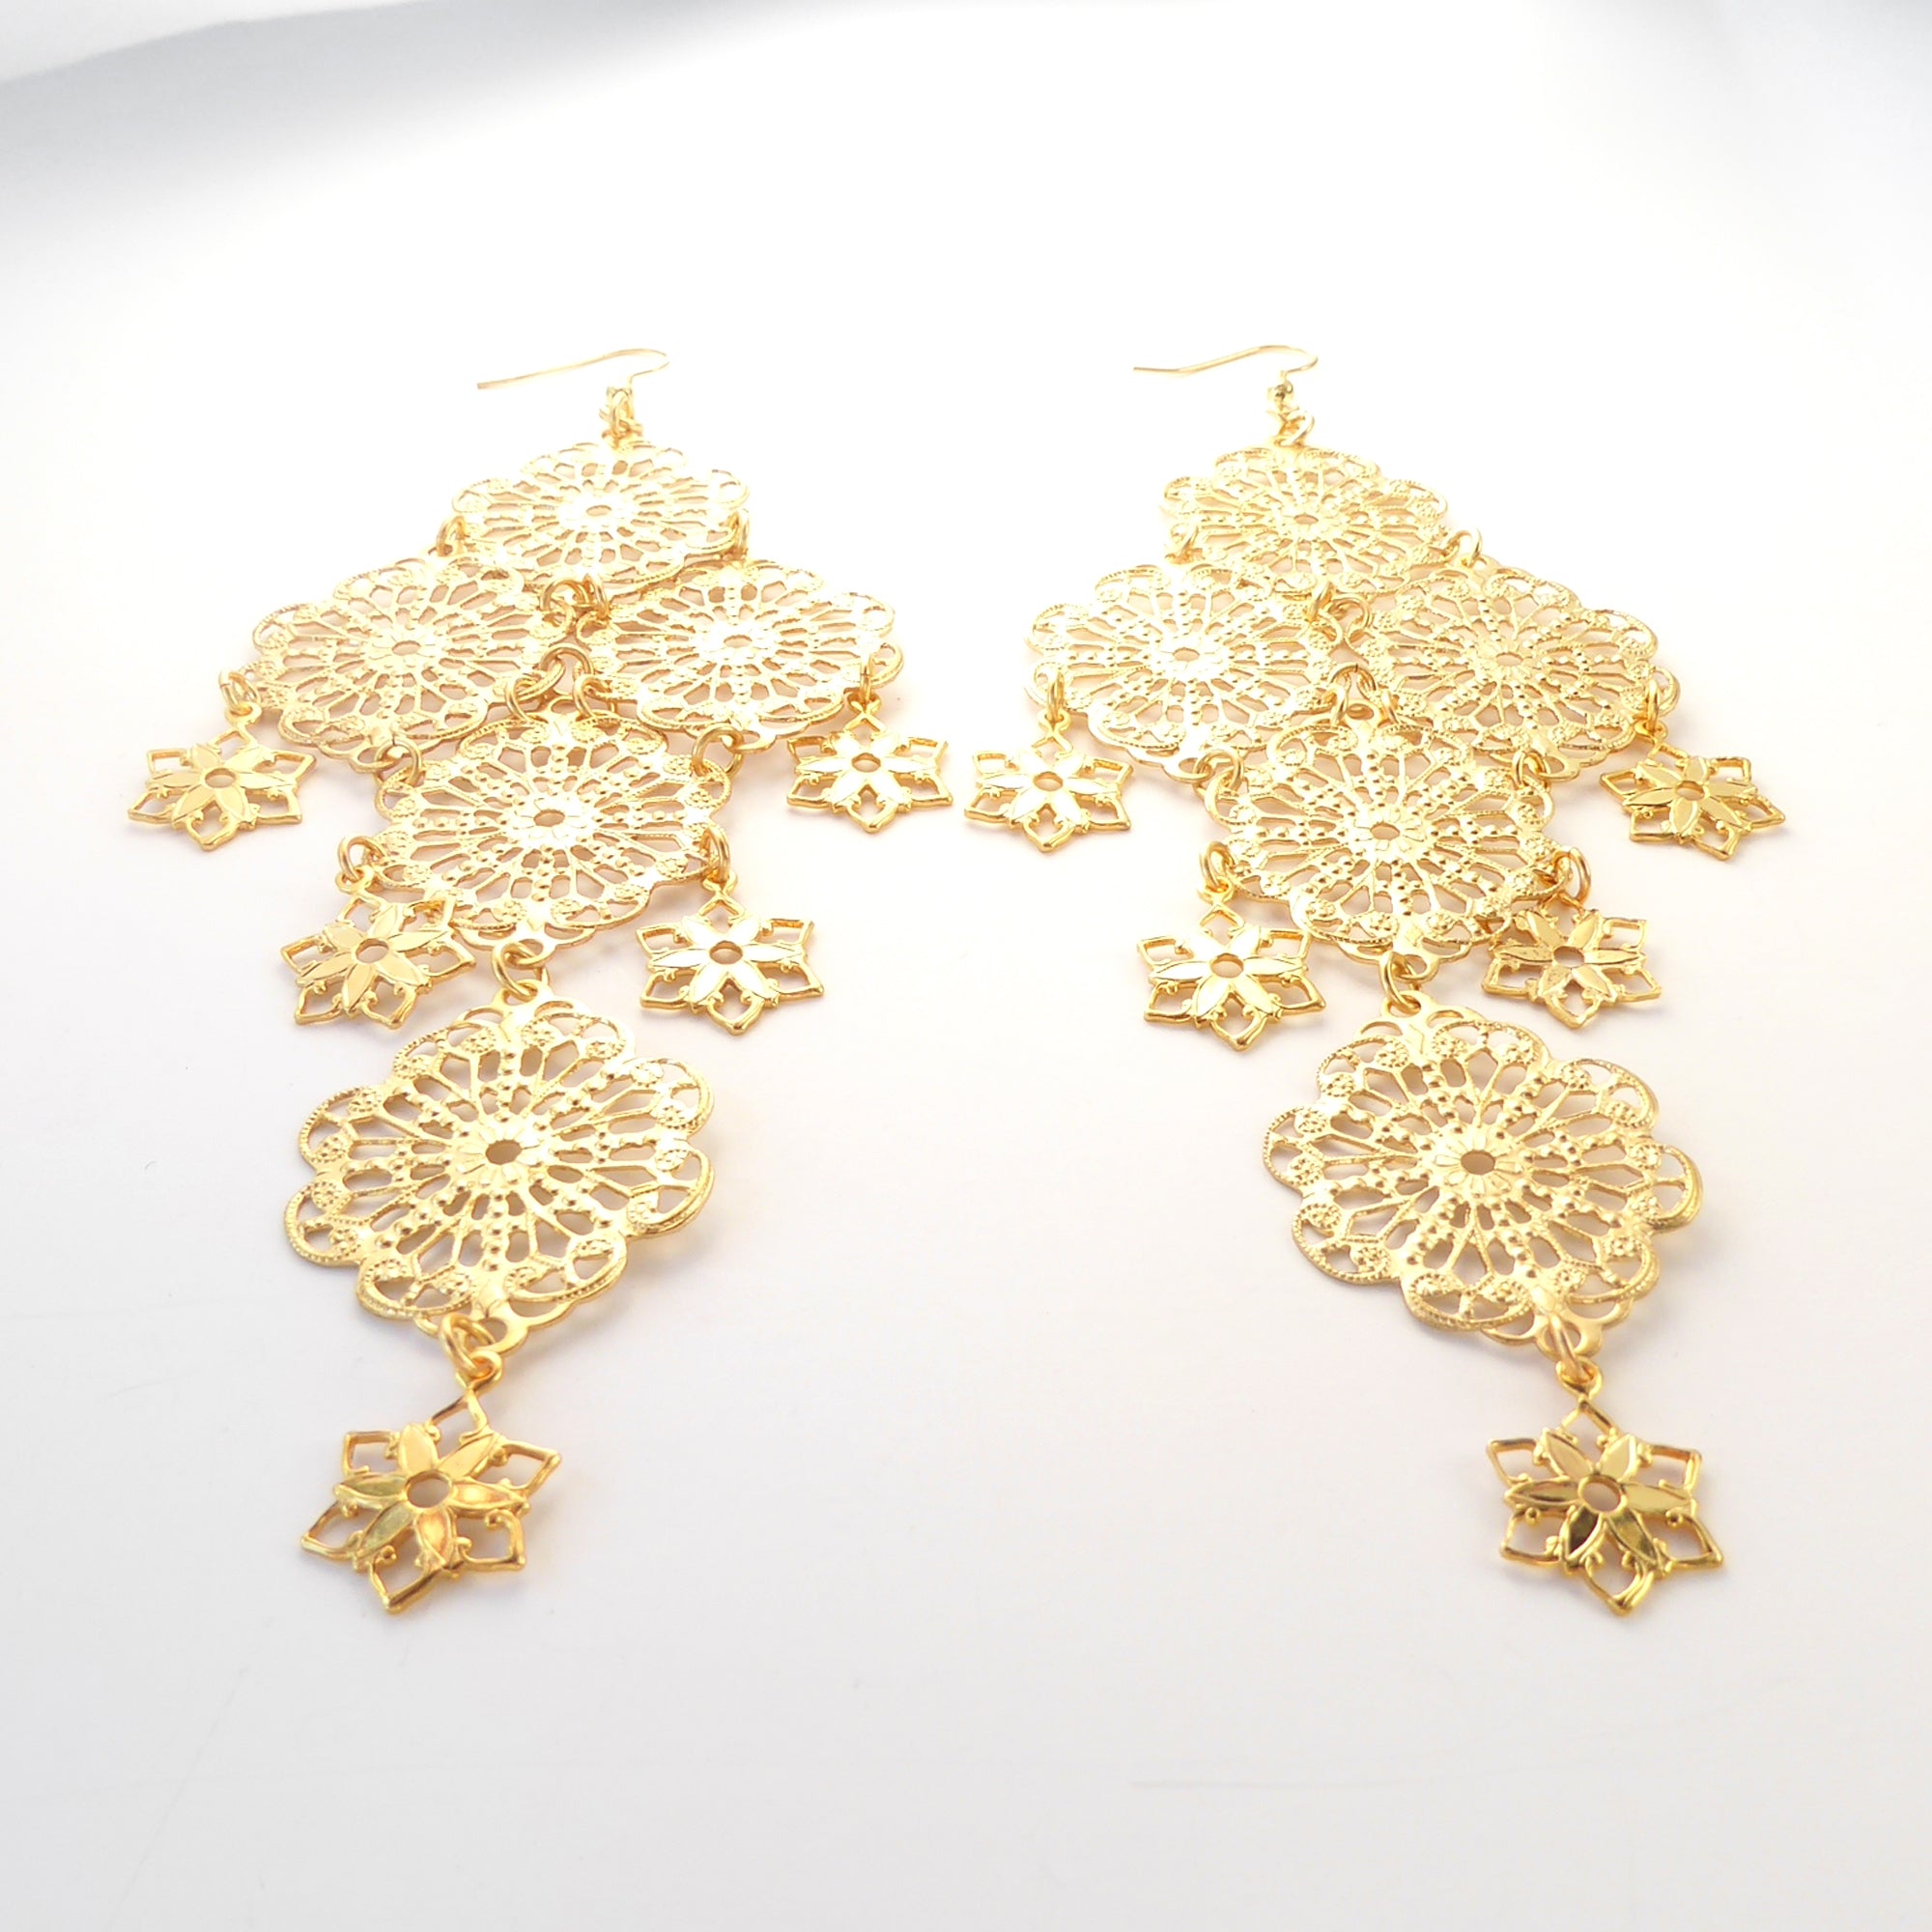 Gold medium estrella earrings by Jenny Dayco 3